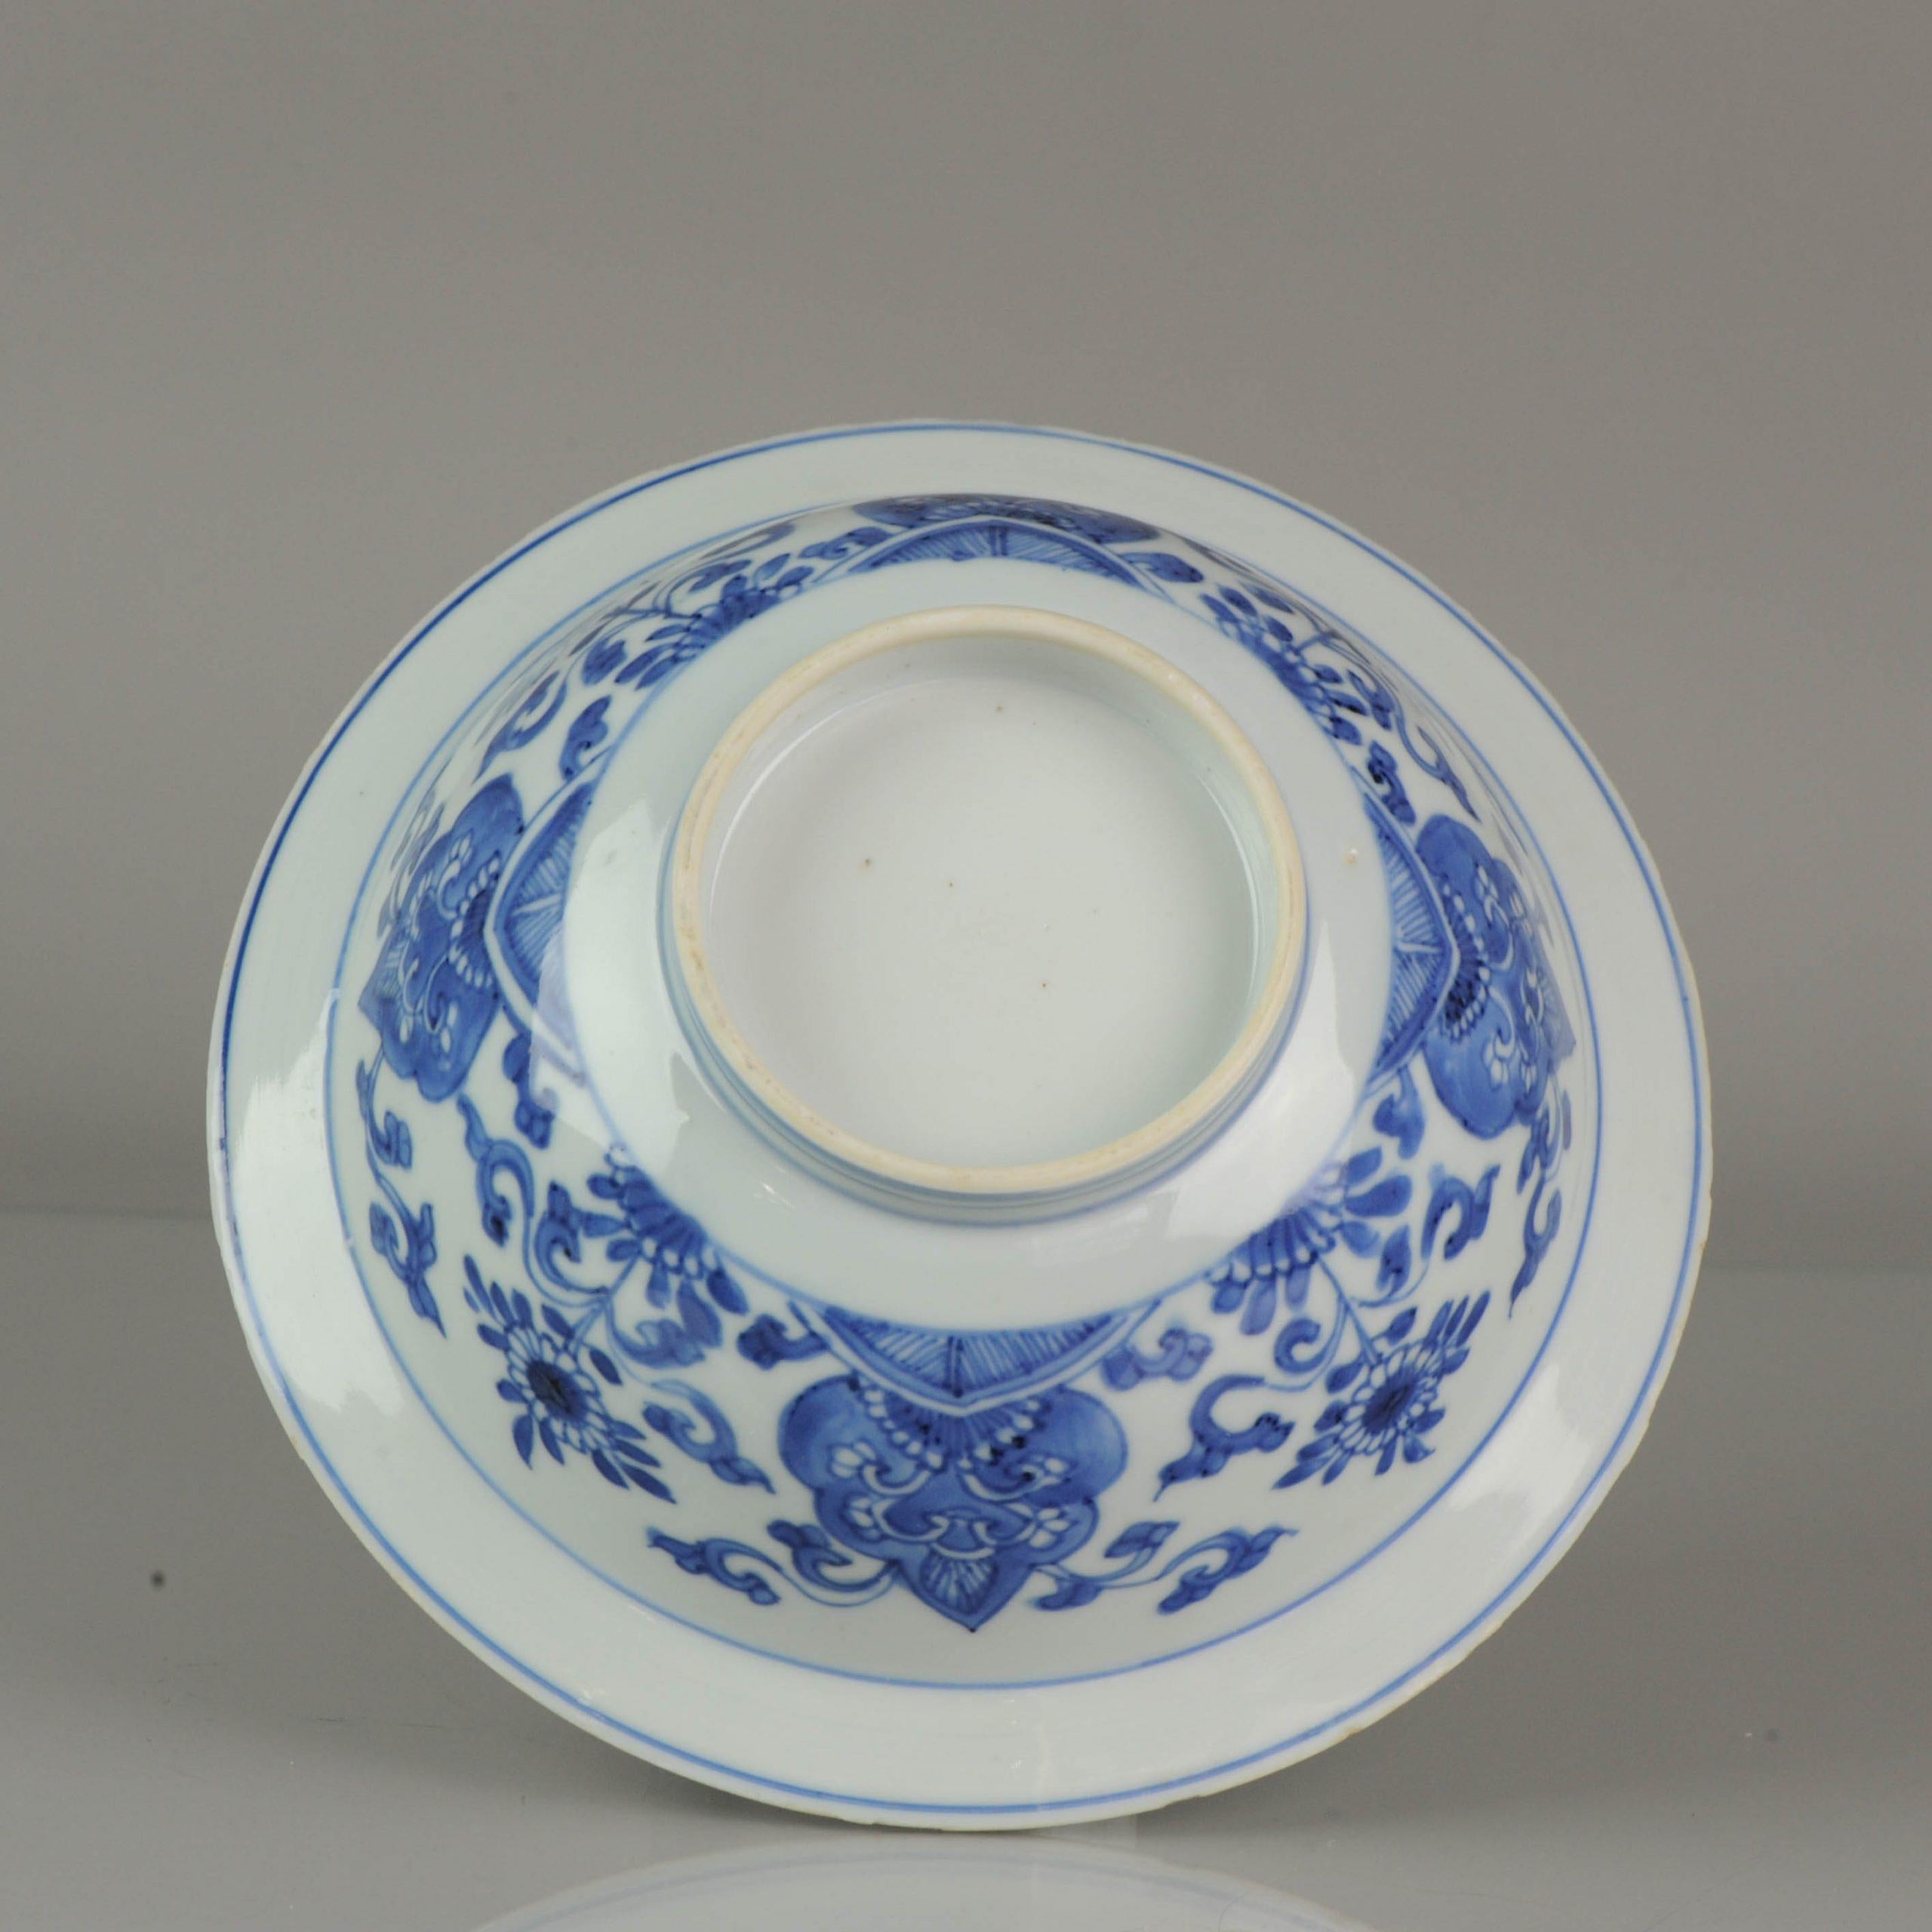 Big Antique Chinese Arabic Style Klapmuts Blue White China Dish 10